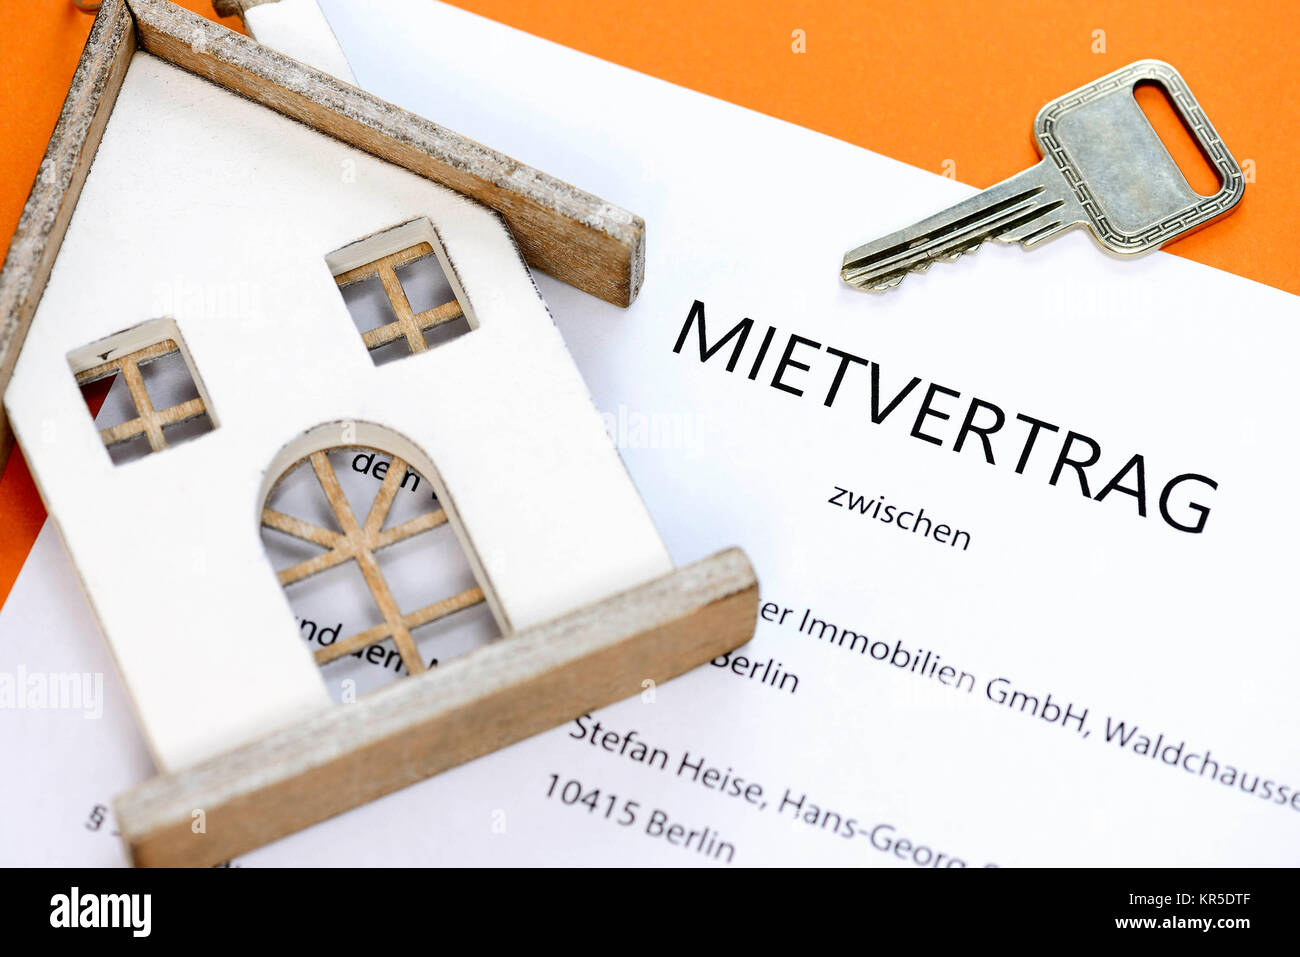 Hire contract with front door key, Mietvertrag mit Haustürschlüssel Stock Photo